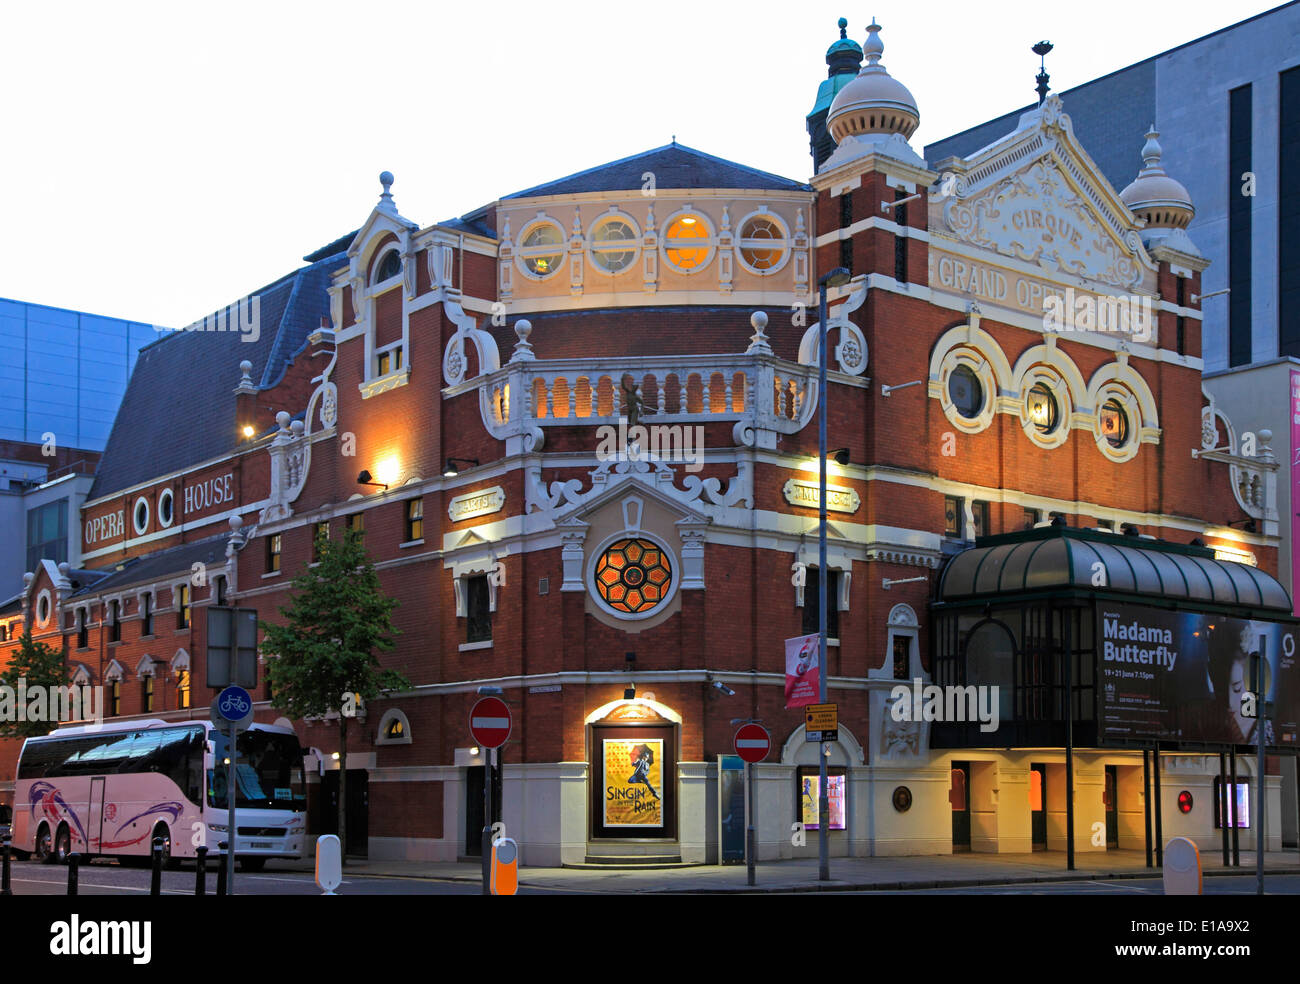 UK, Northern Ireland, Belfast, Grand Opera House, Stock Photo